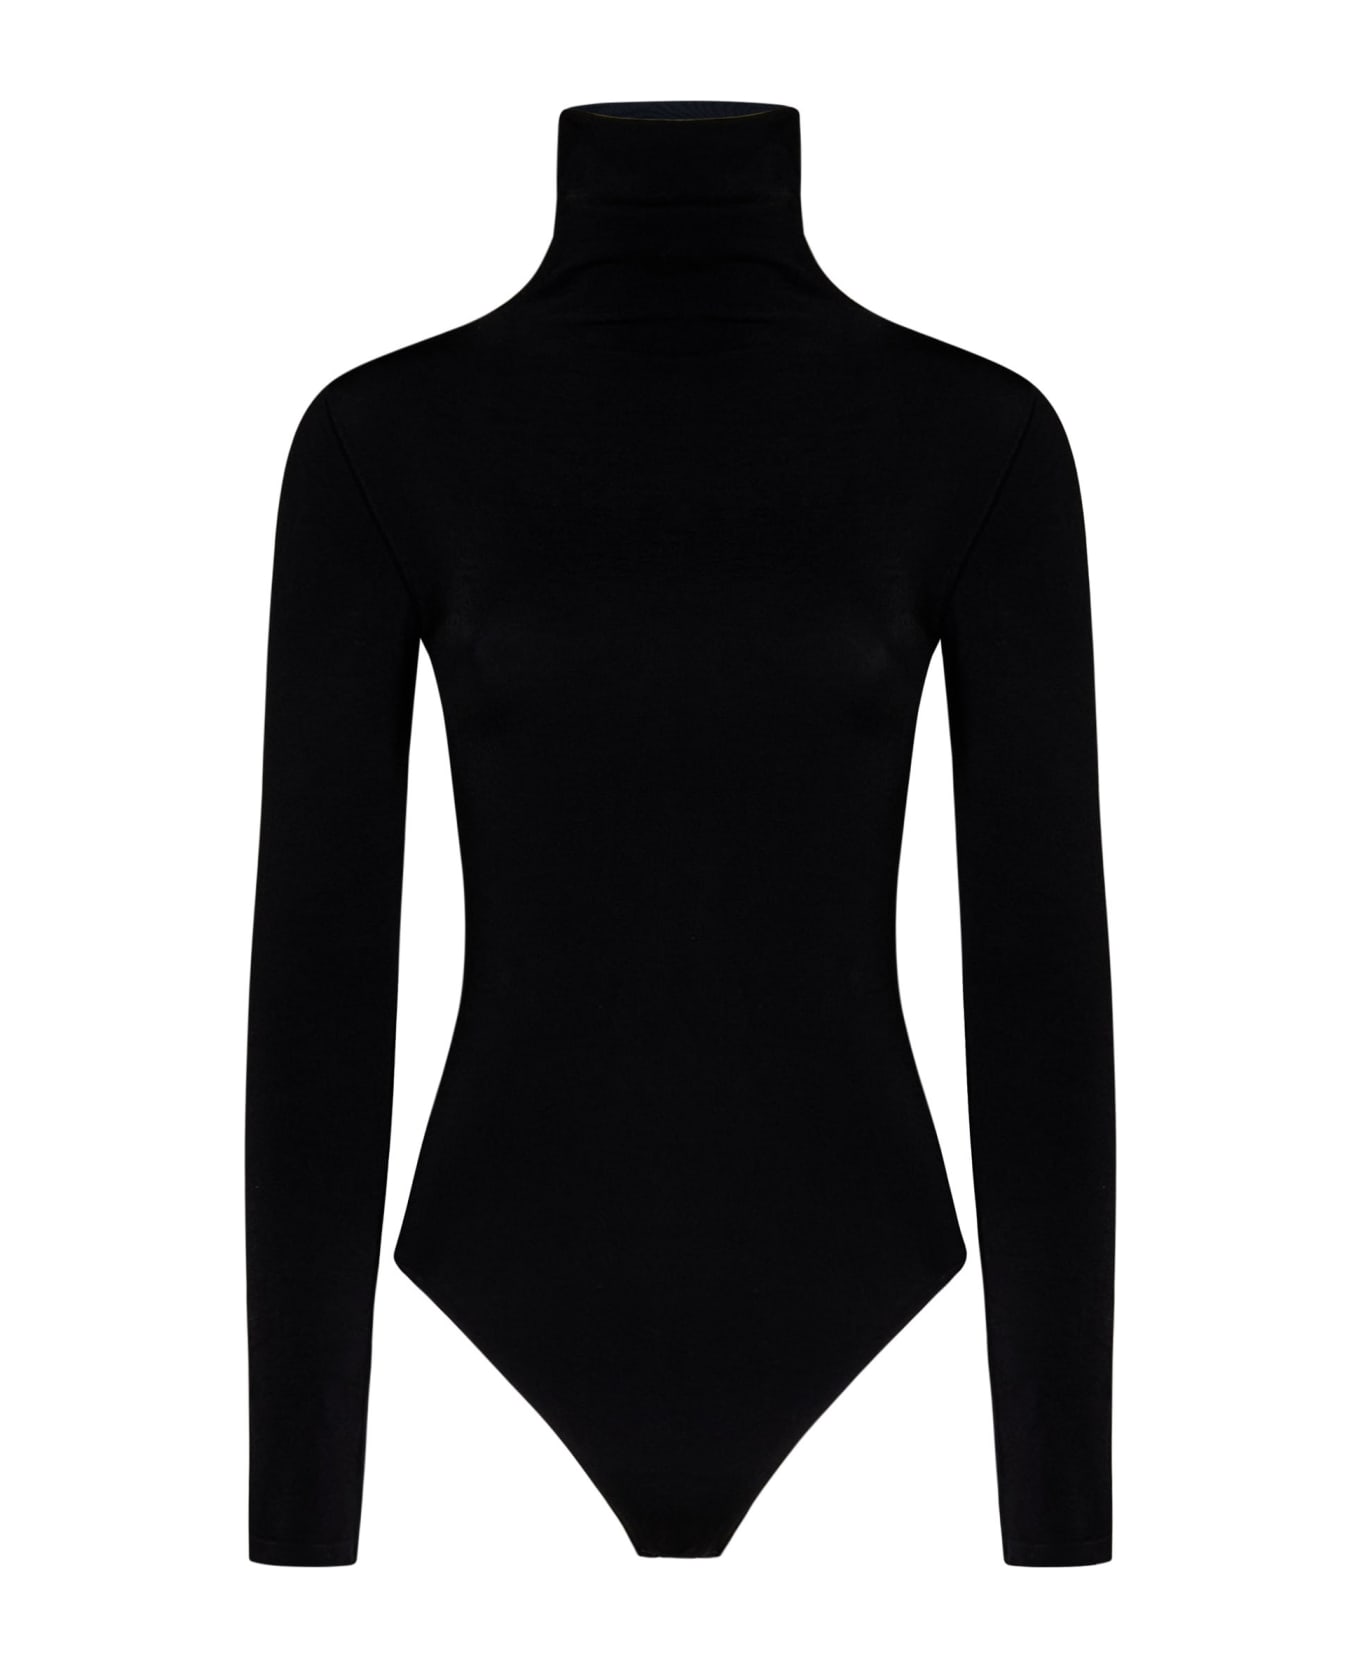 Wolford Colorado Bodysuit - Black